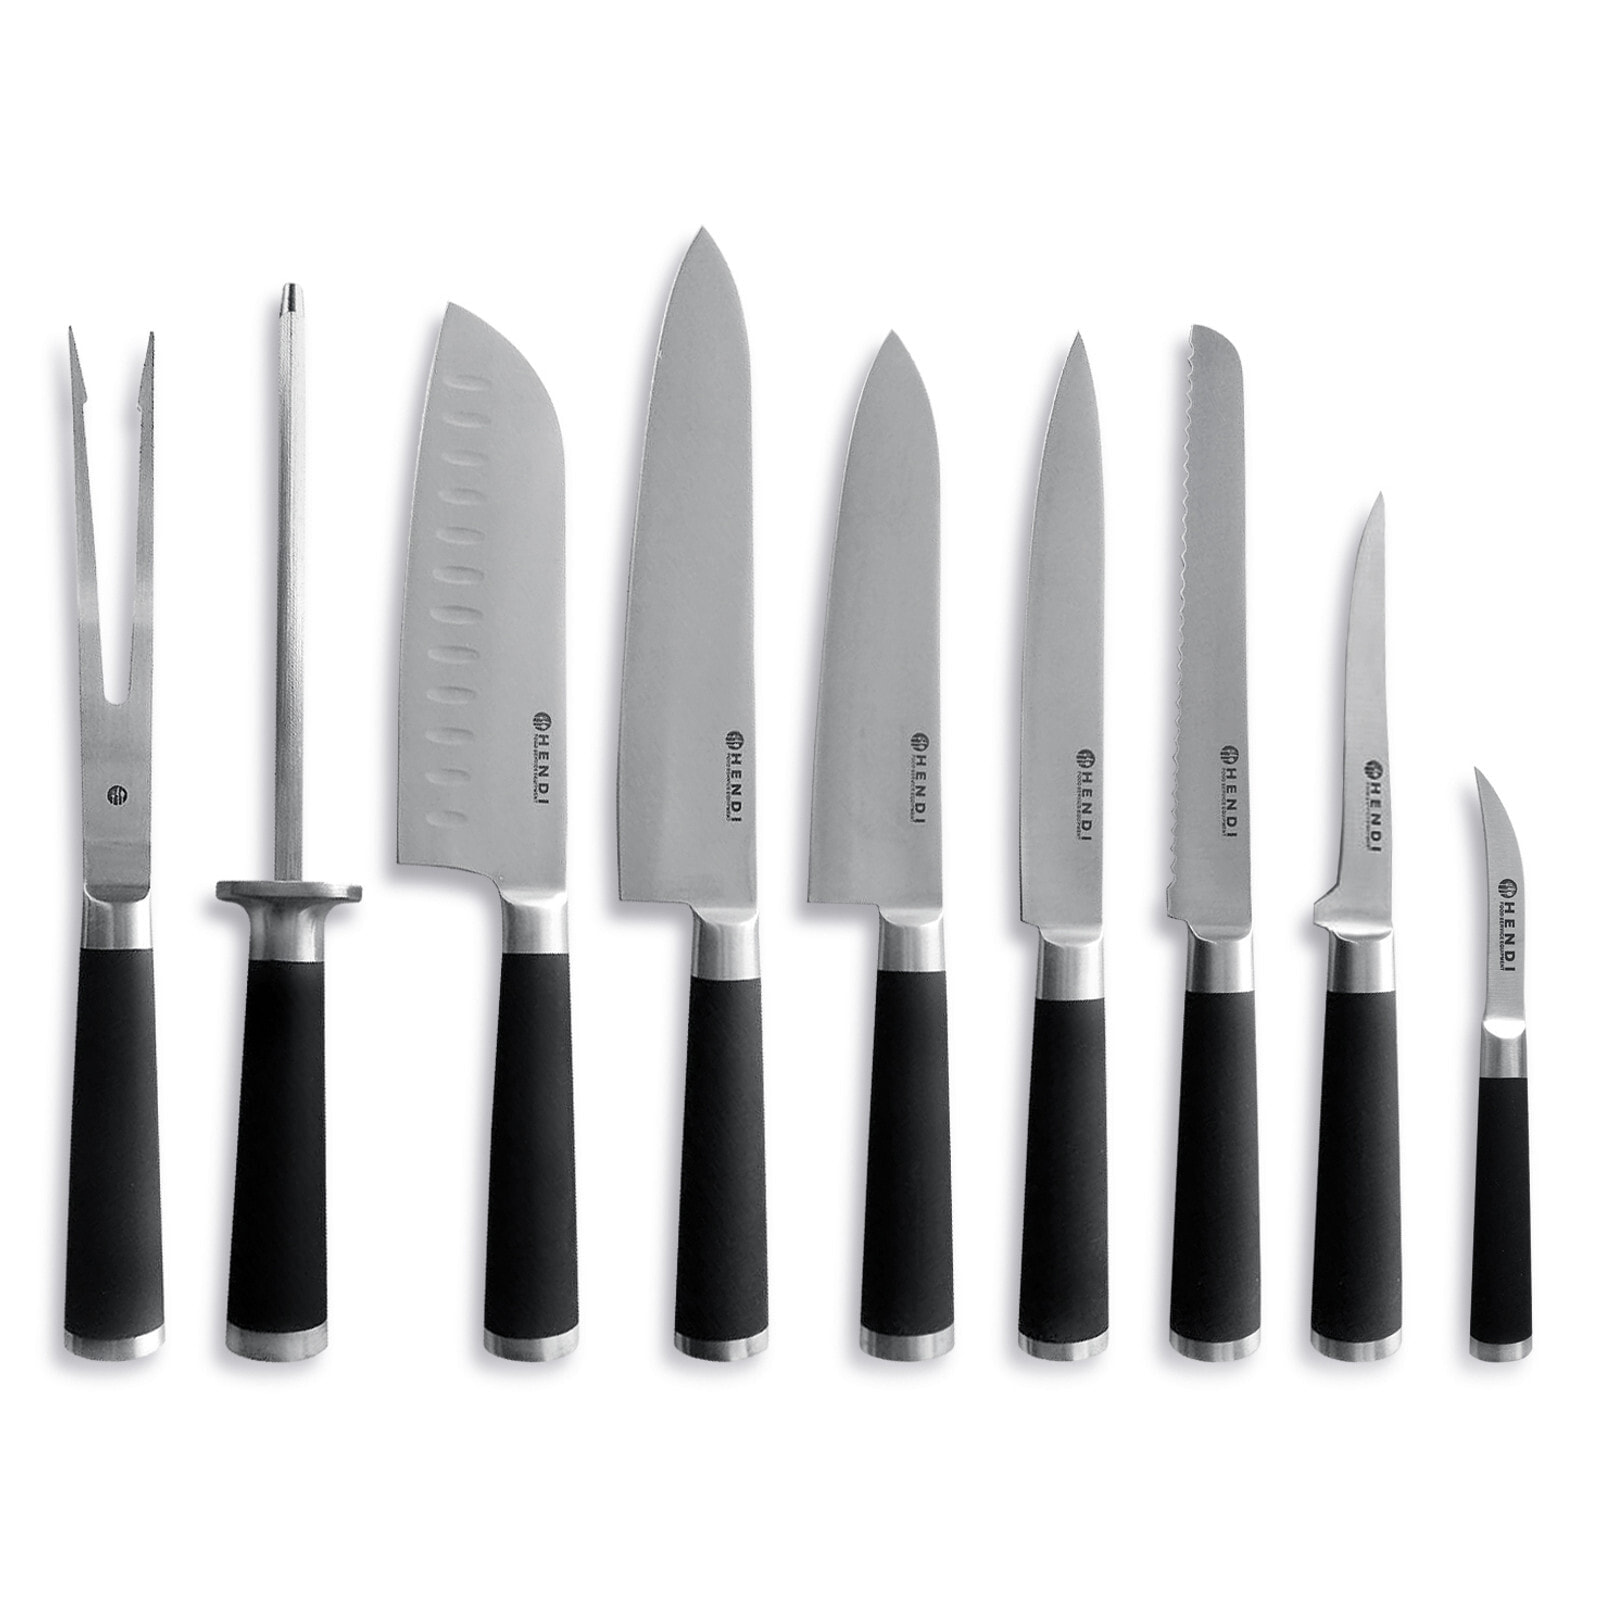 Chef's knife set Kurt Scheller edition 9 pieces - Hendi 975770